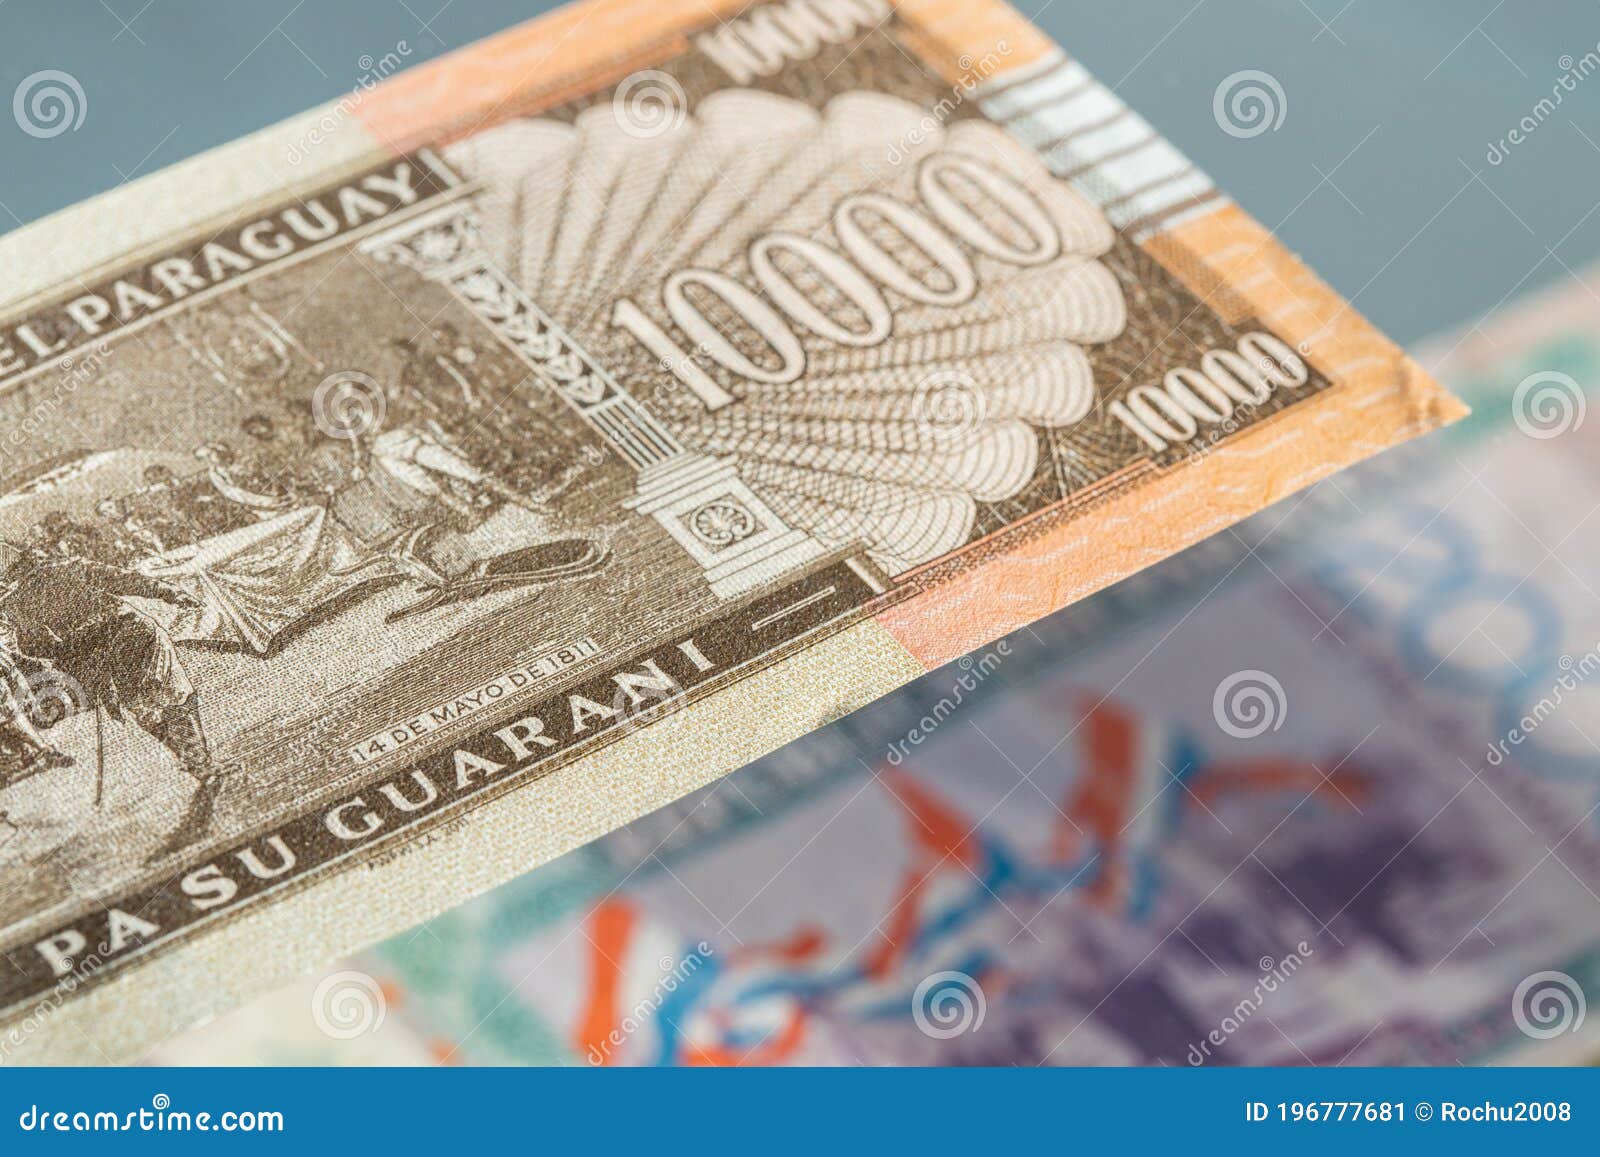 paraguay money, guaranies, paper banknotes